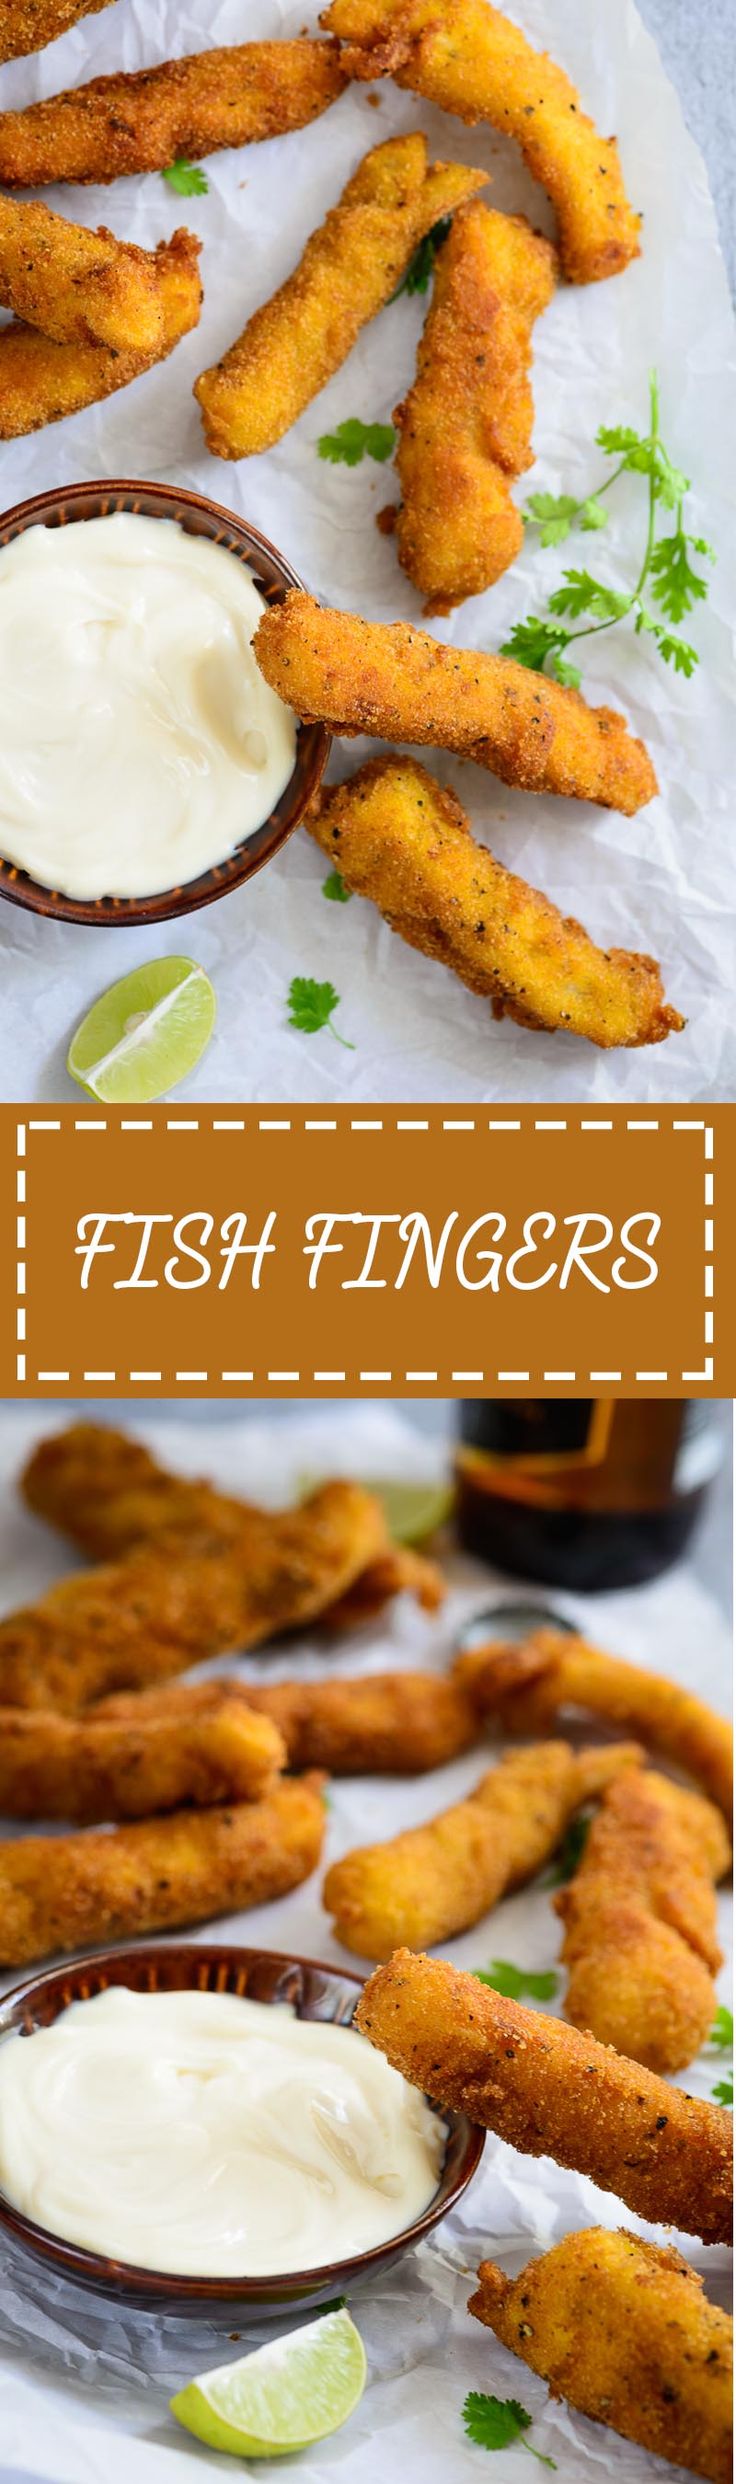 appetizers clipart fish finger